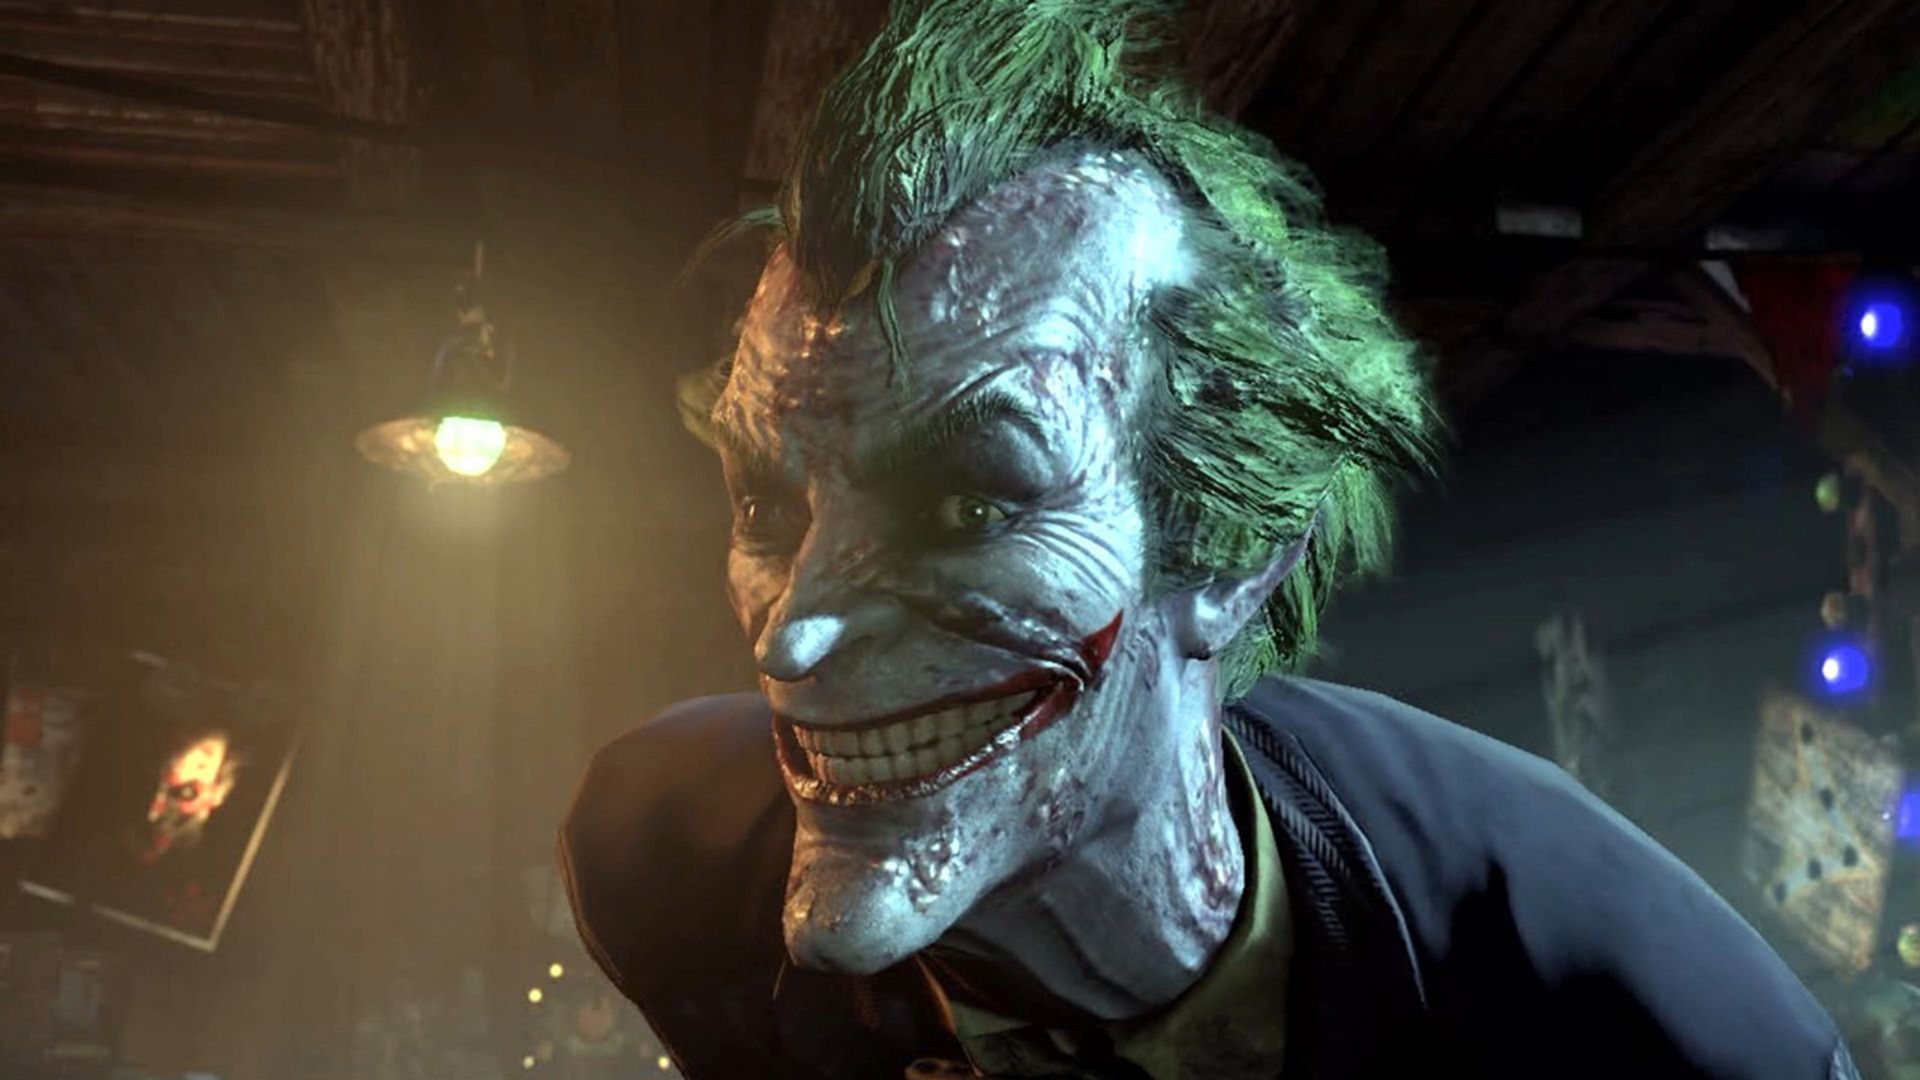 Batman: Arkham Trilogy Delayed to December 1st for Nintendo Switch